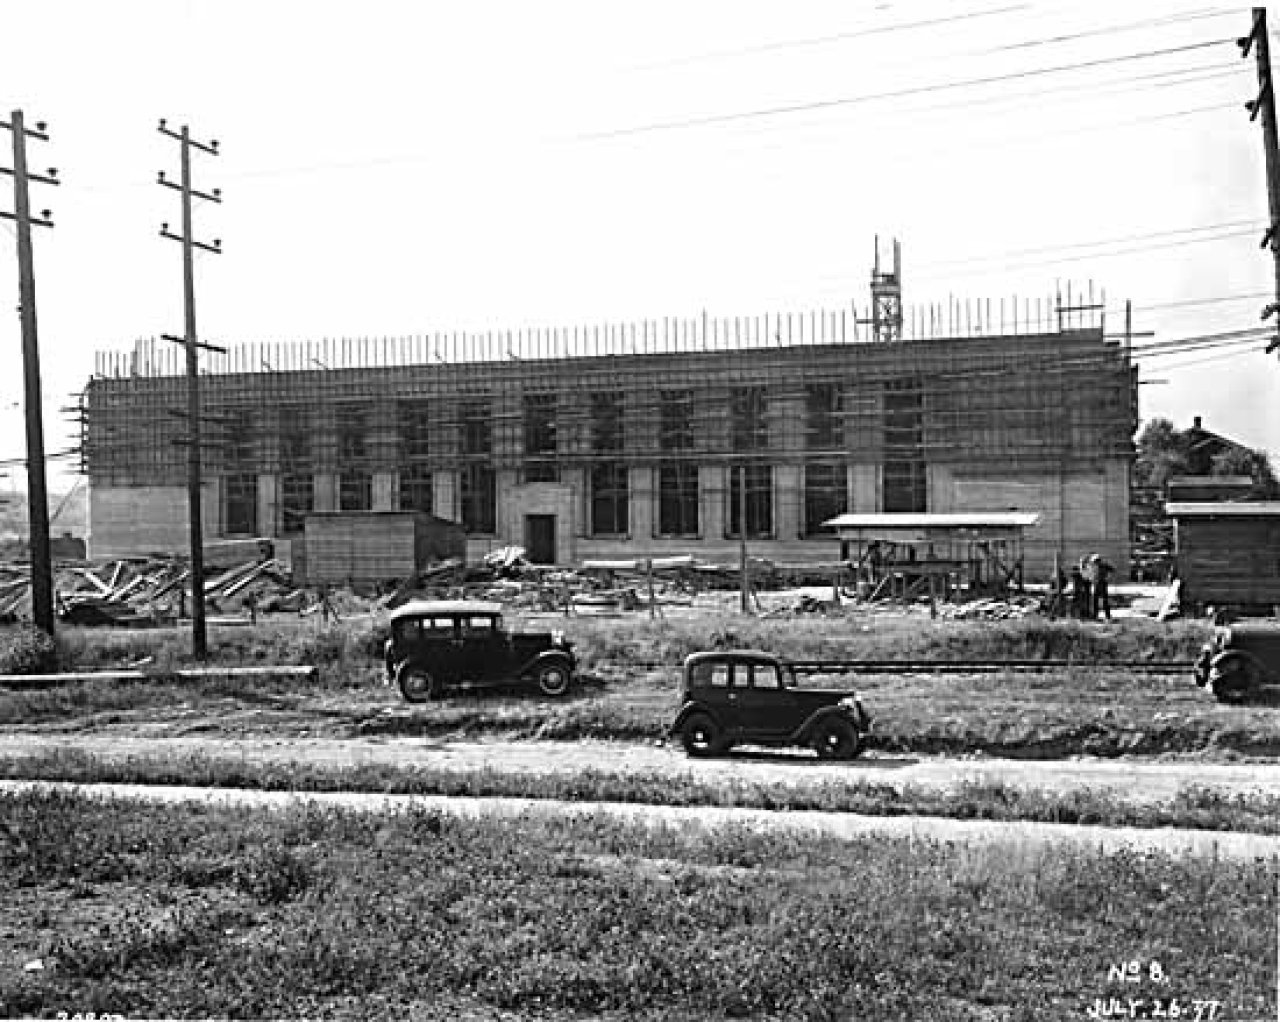 VPL 11557 BCER Co. Ltd Sub Station under construction in 1937 